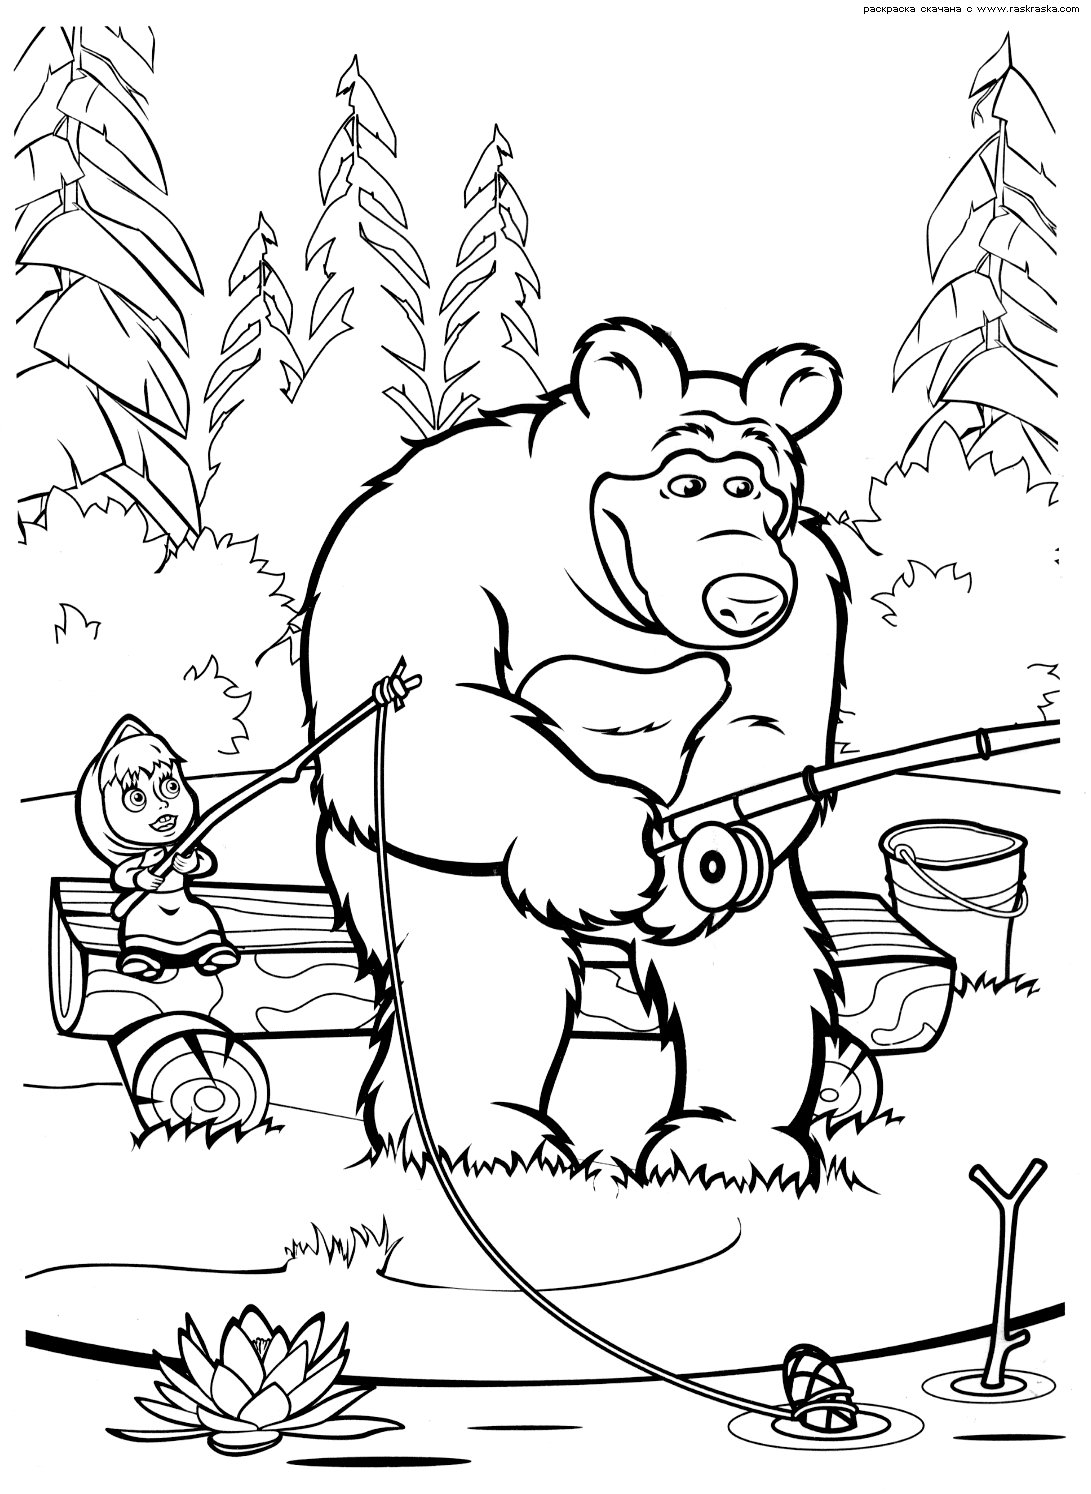 10 Mewarnai Gambar Masha And The Bear